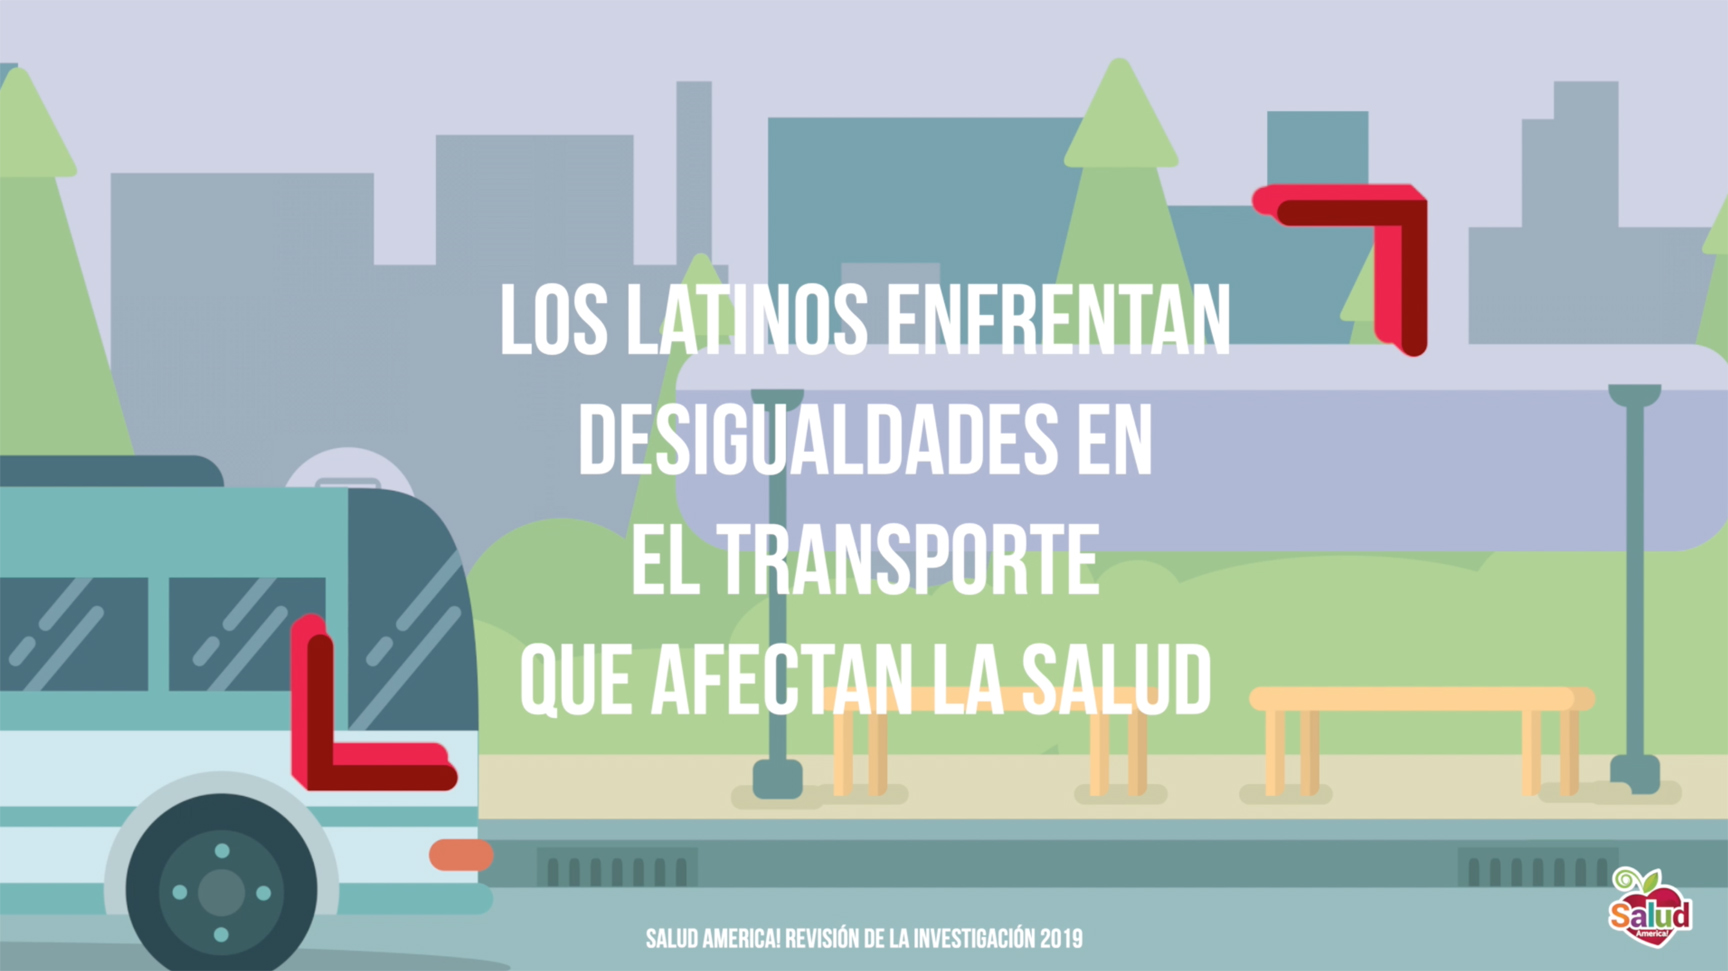 Transit -Latino Inequities - En Espanol Spanish